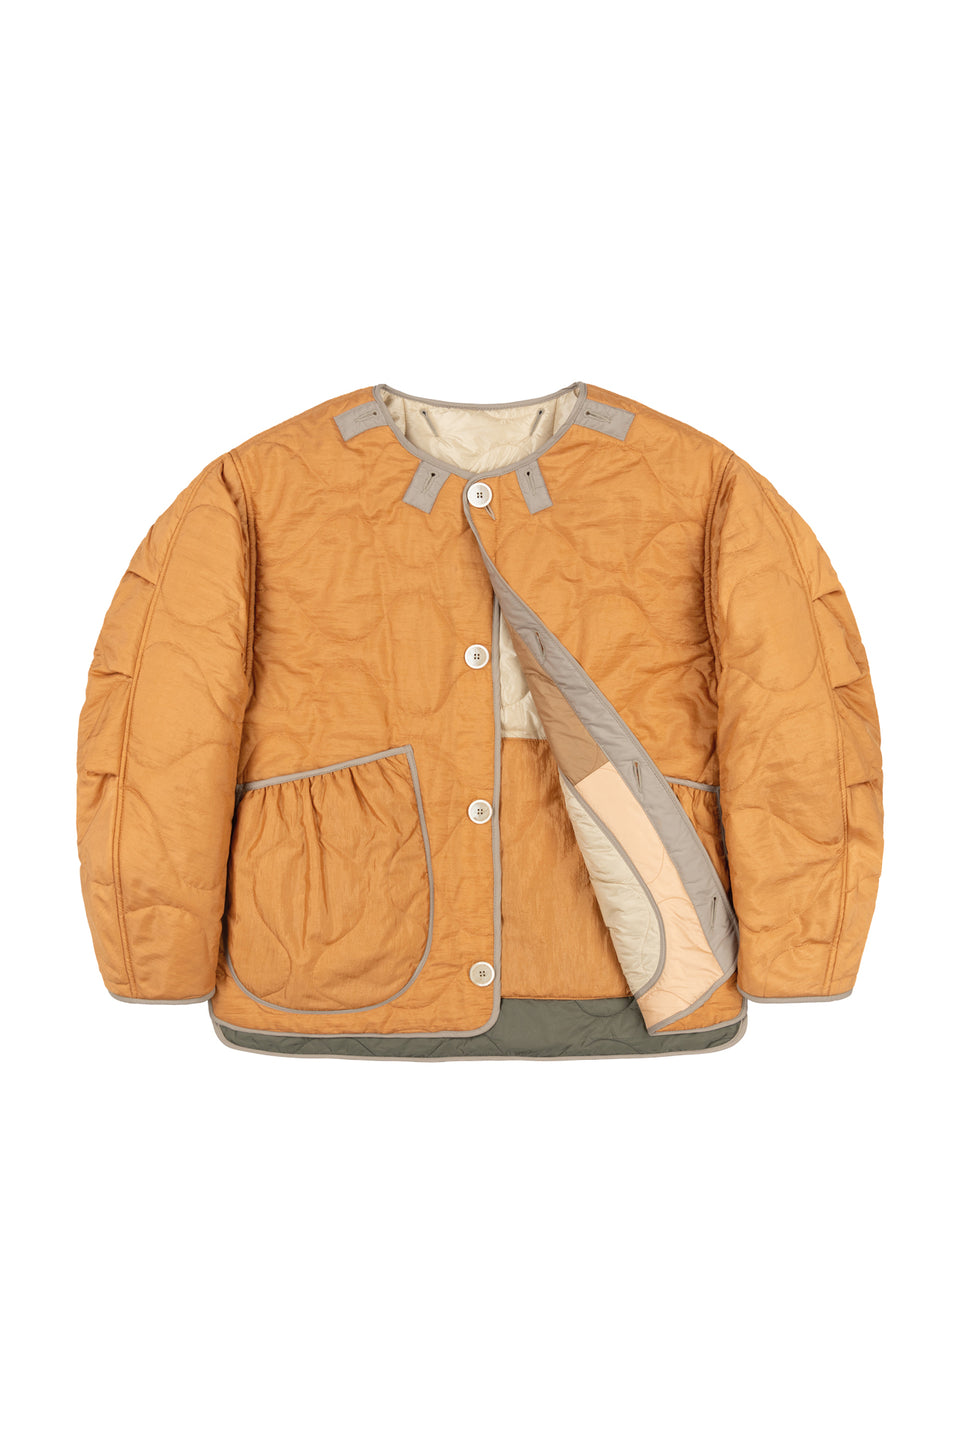 Patchwork Quilt Jacket - Mocha Brown / Burnt Orange (listing page thumbnail)